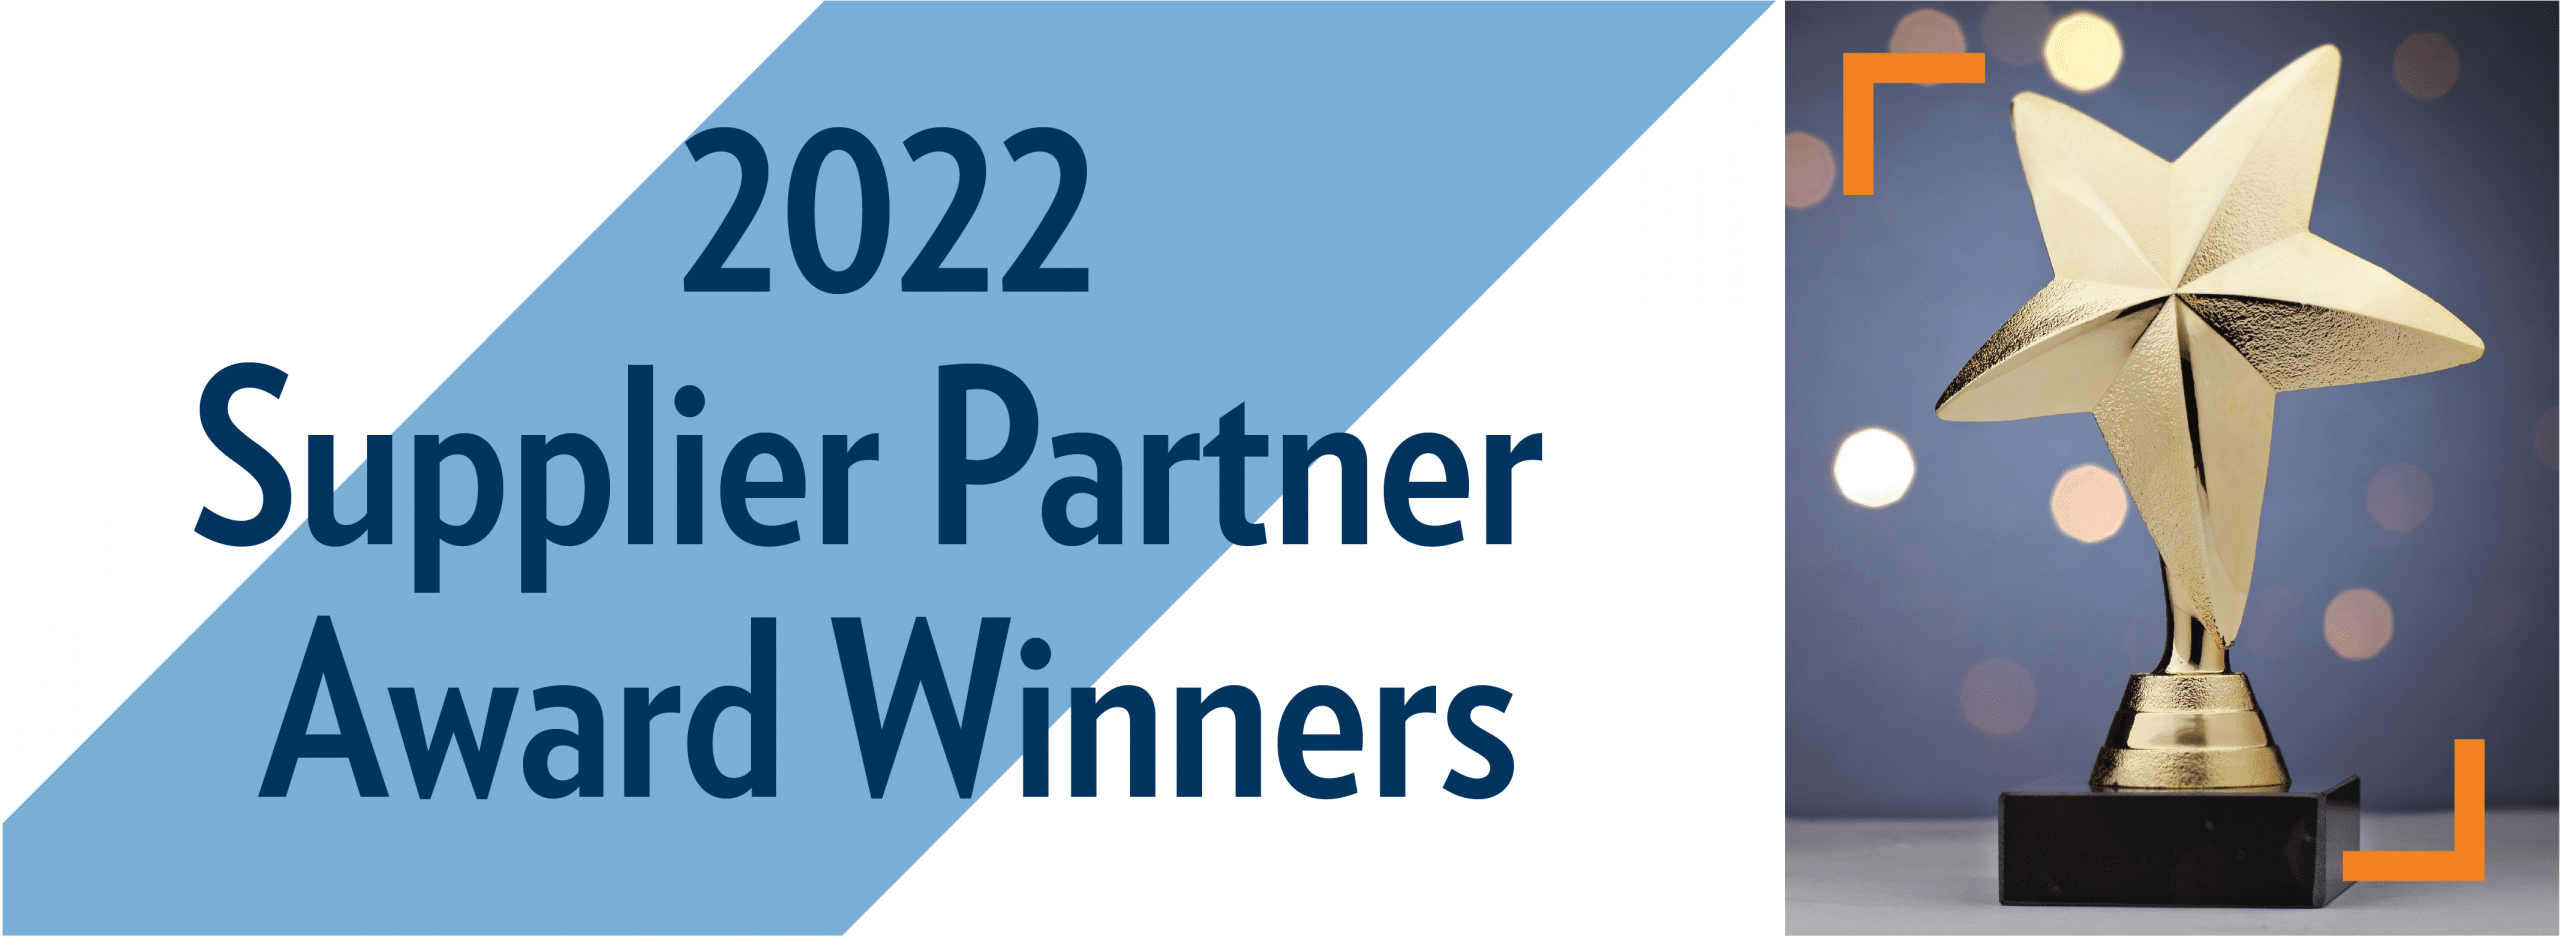 Altair Global Supplier Partner Awards 2022 Winners